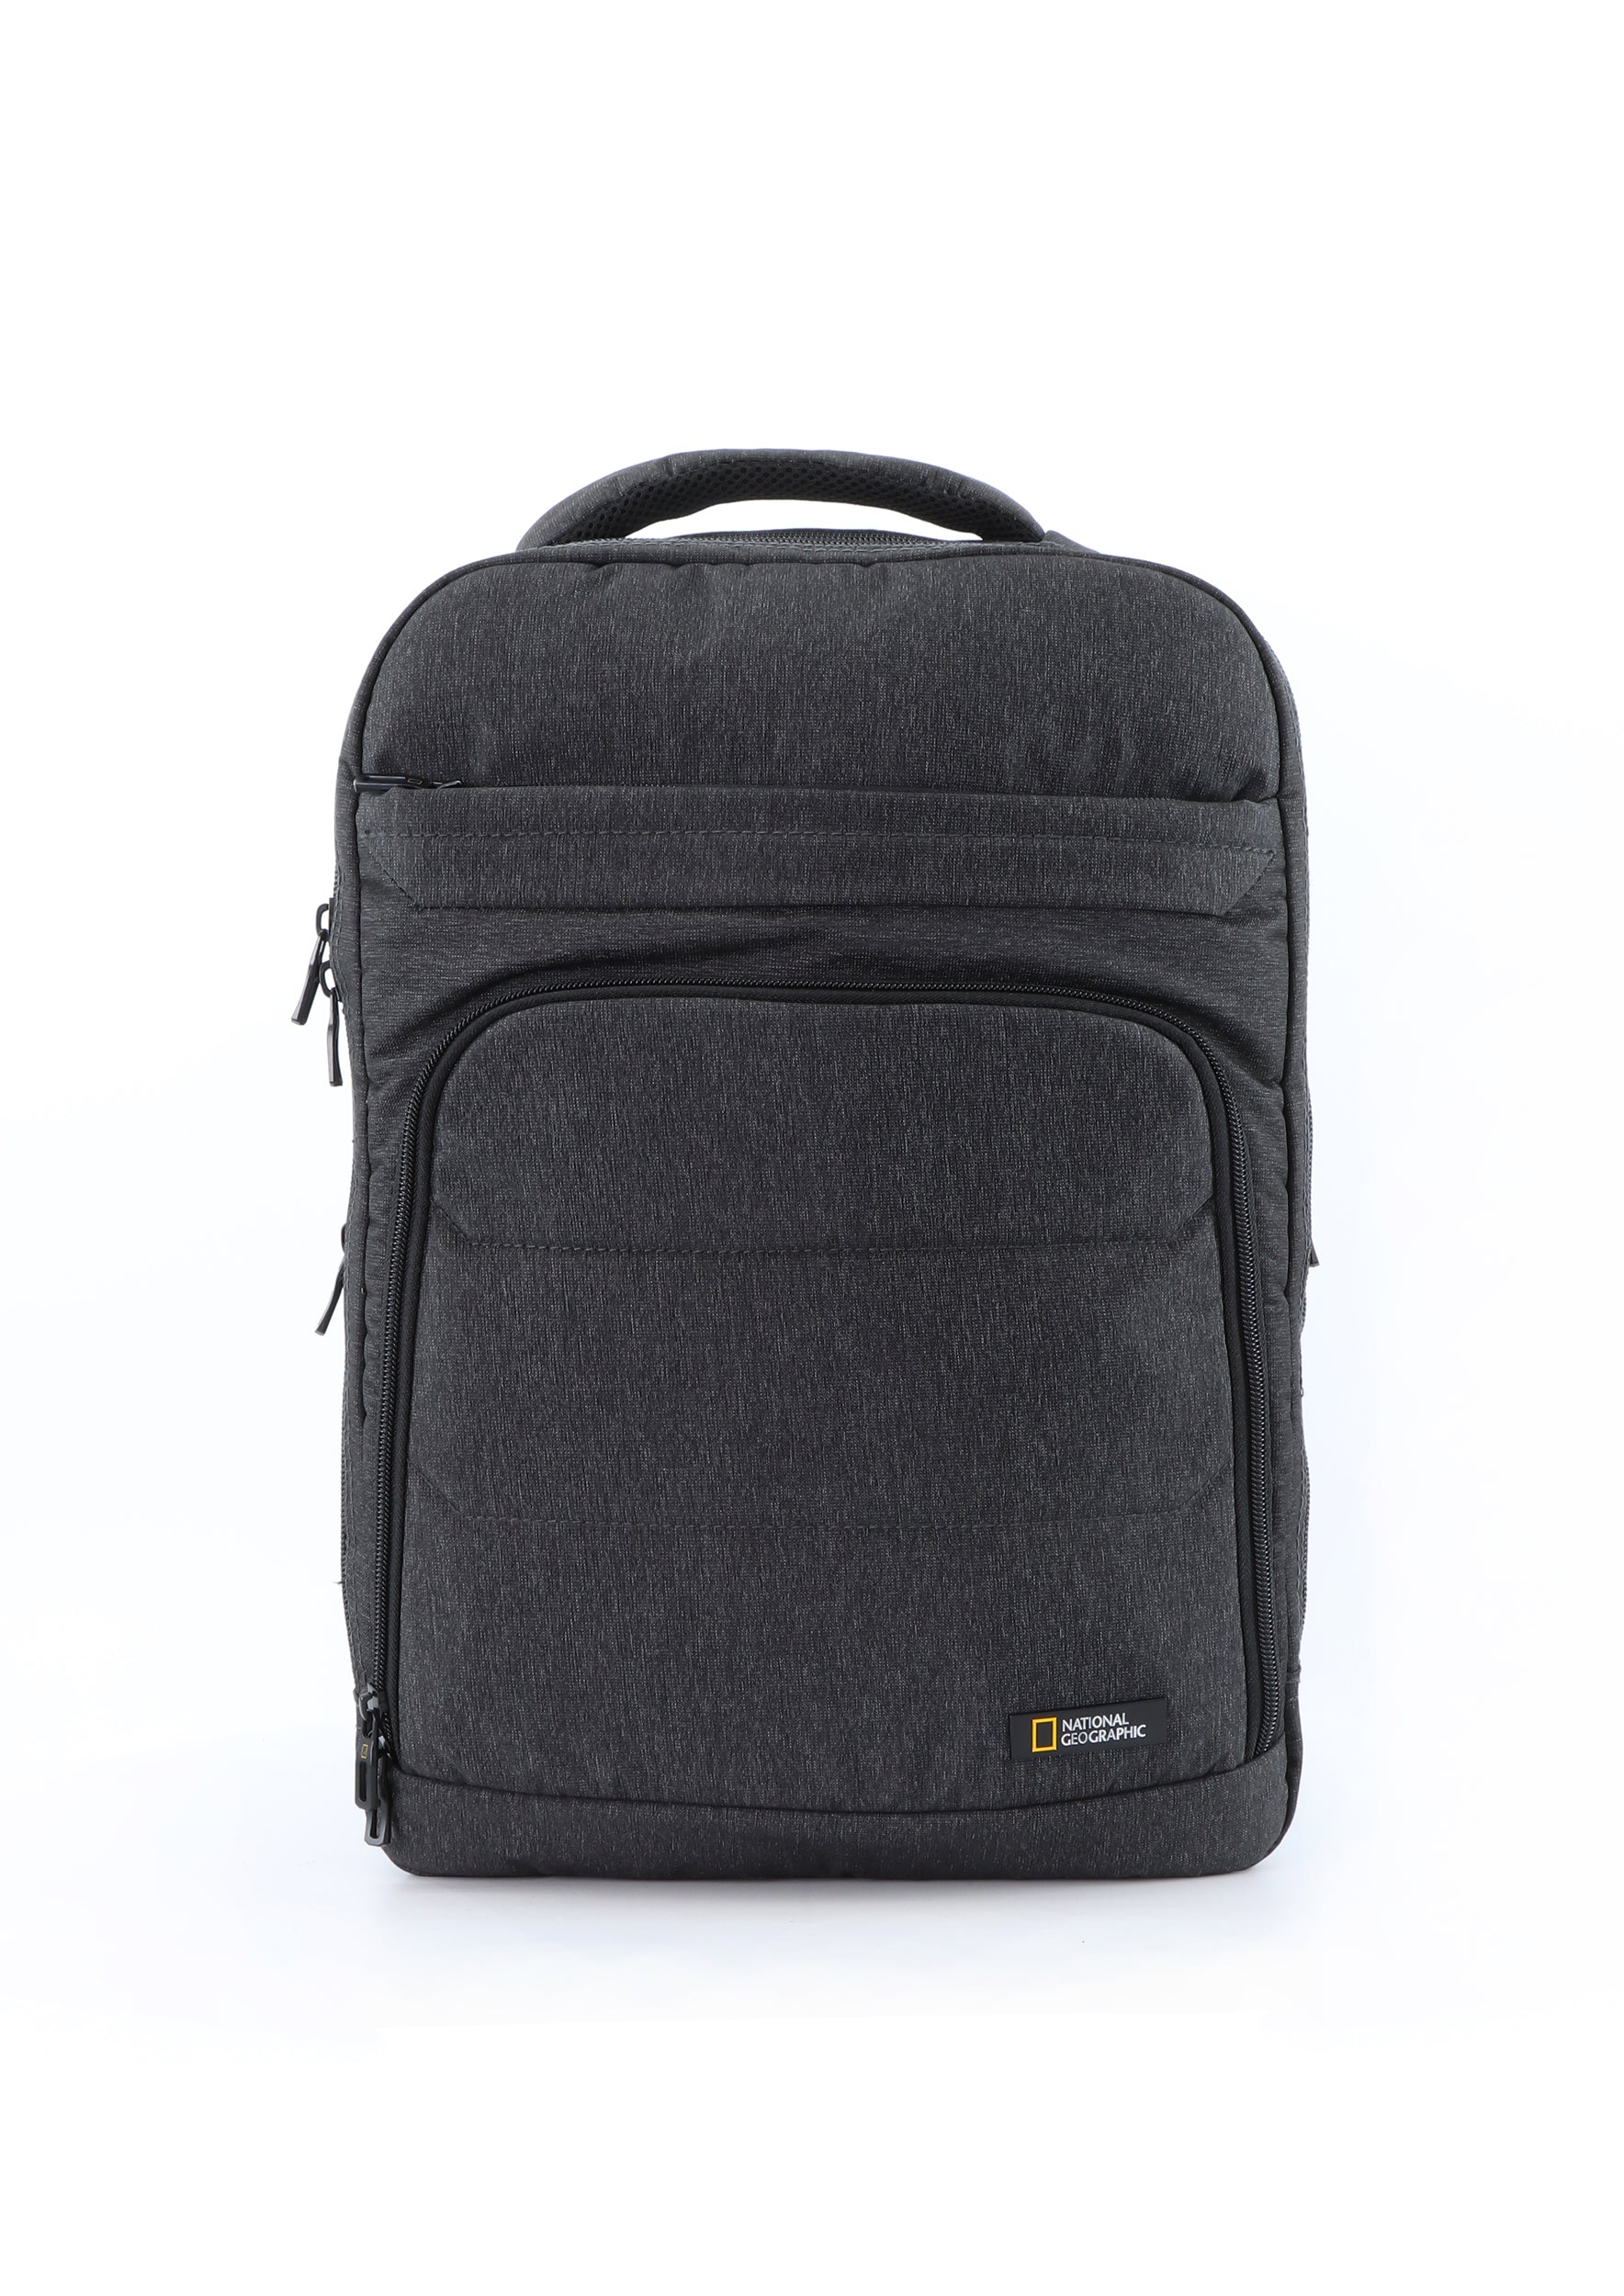 National Geographic Pro - Voorkant 2-Tone Grijs laptop rugzak | luggage4u.be